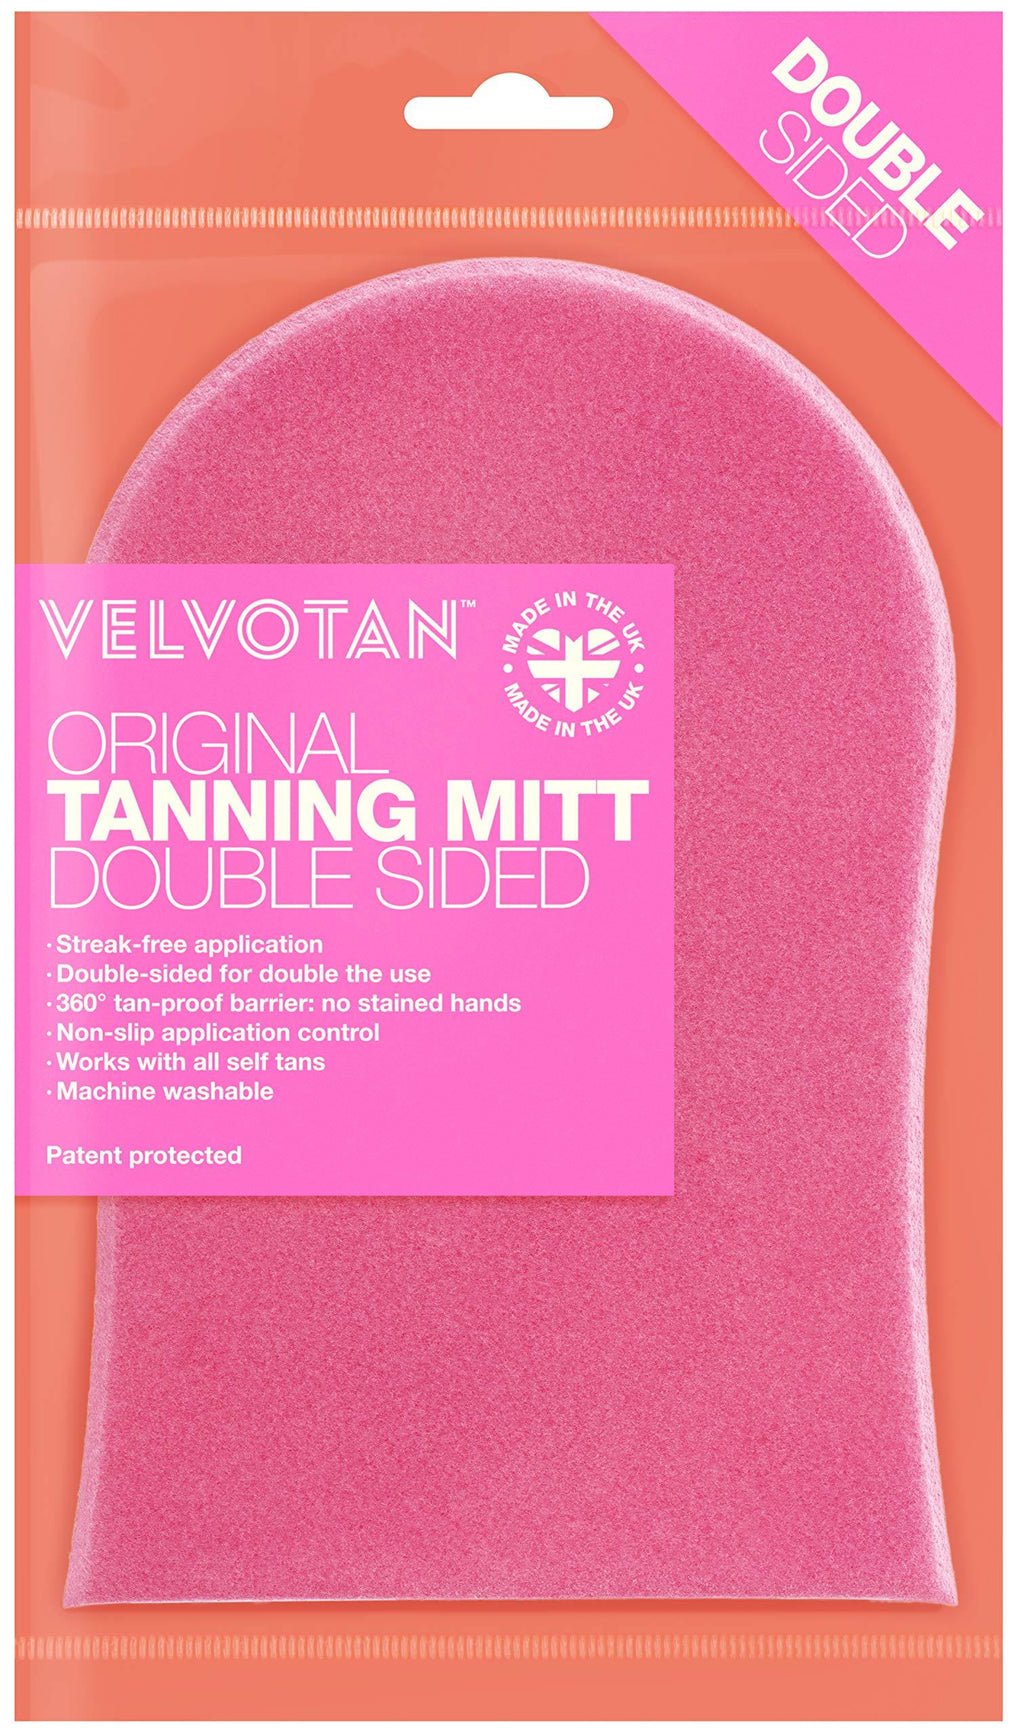 VELVOTAN Original Double Sided Tanning Mitt Pink - Self Tanning Applicator - Clever Lotion Resistant - Reusable - Sleek Application - NewNest Australia